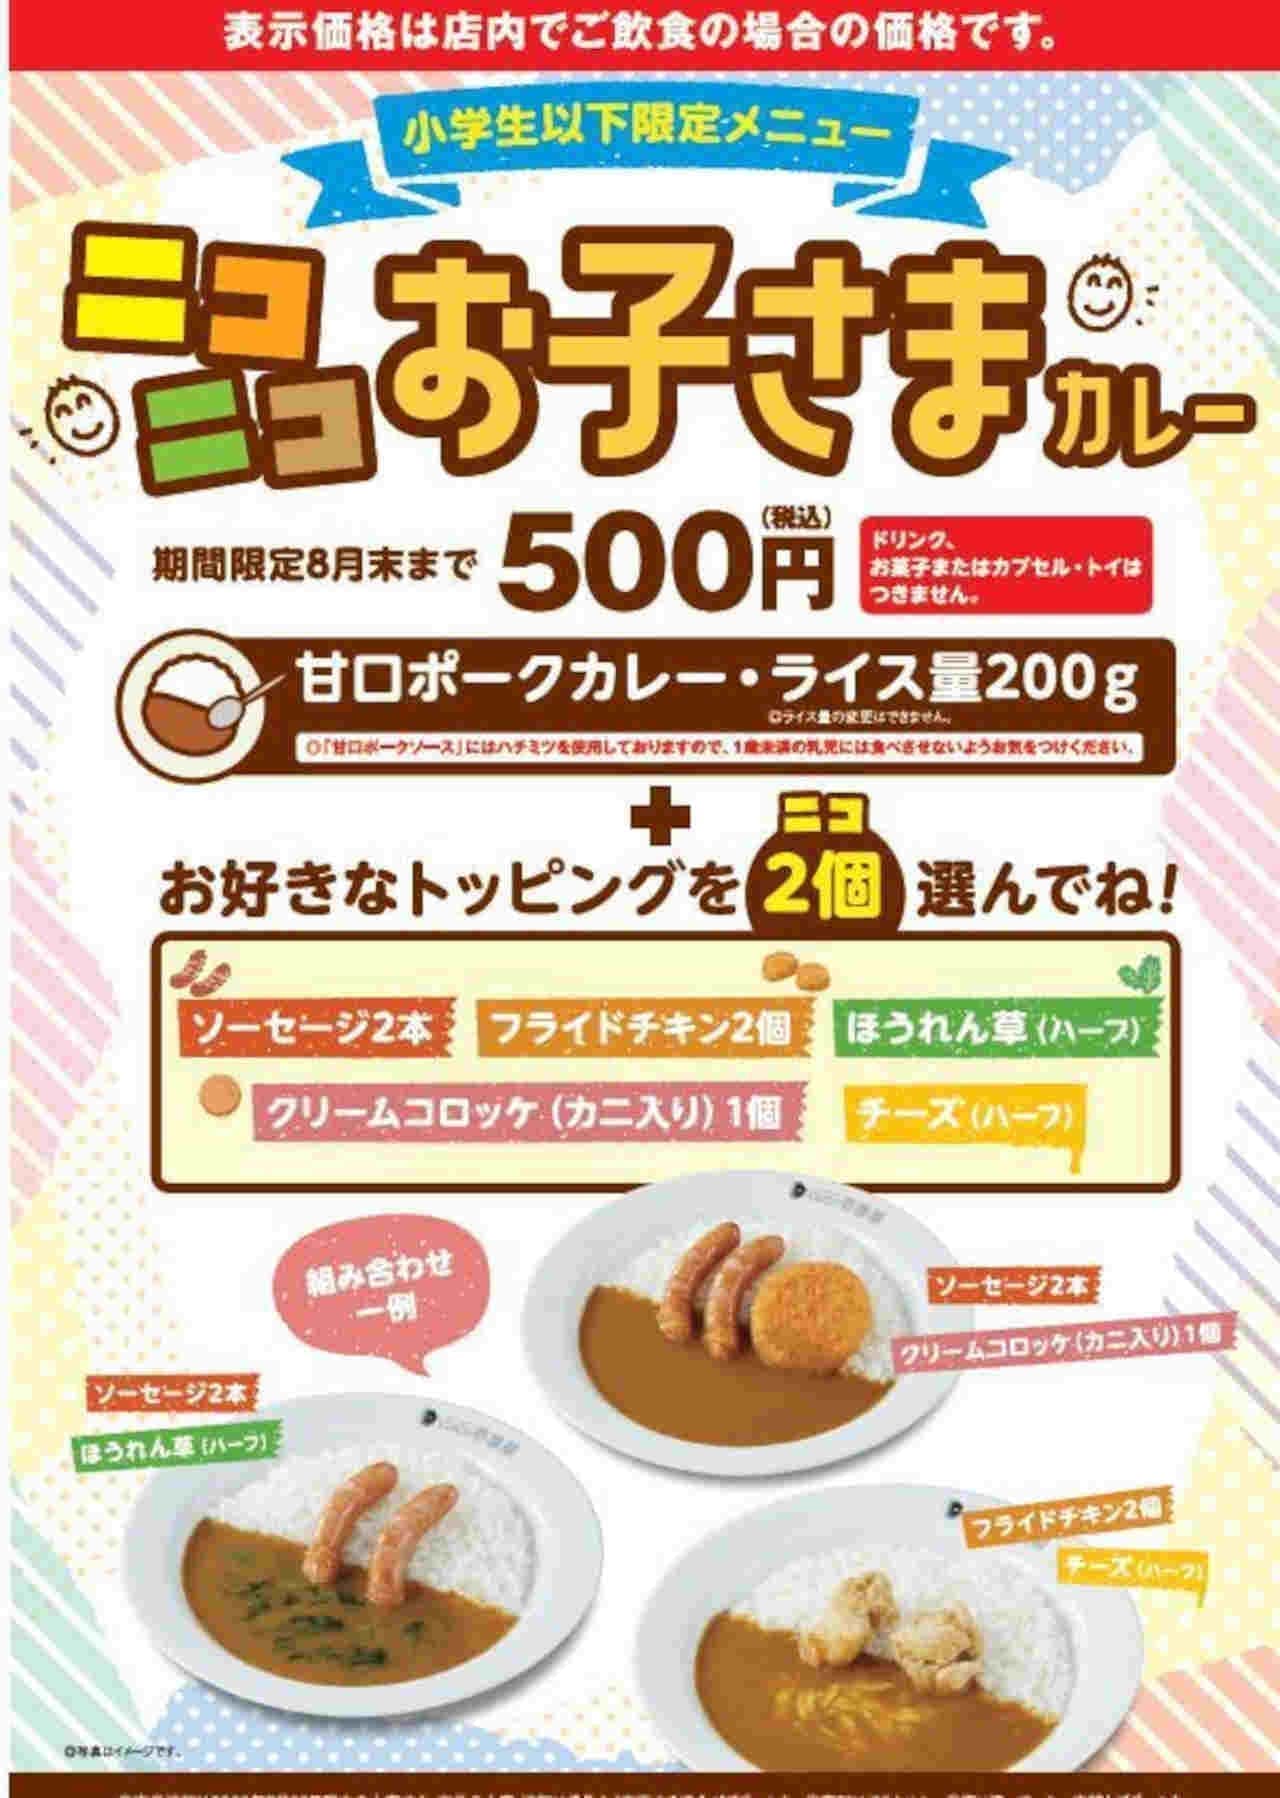 CoCo Ichibanya's new menu